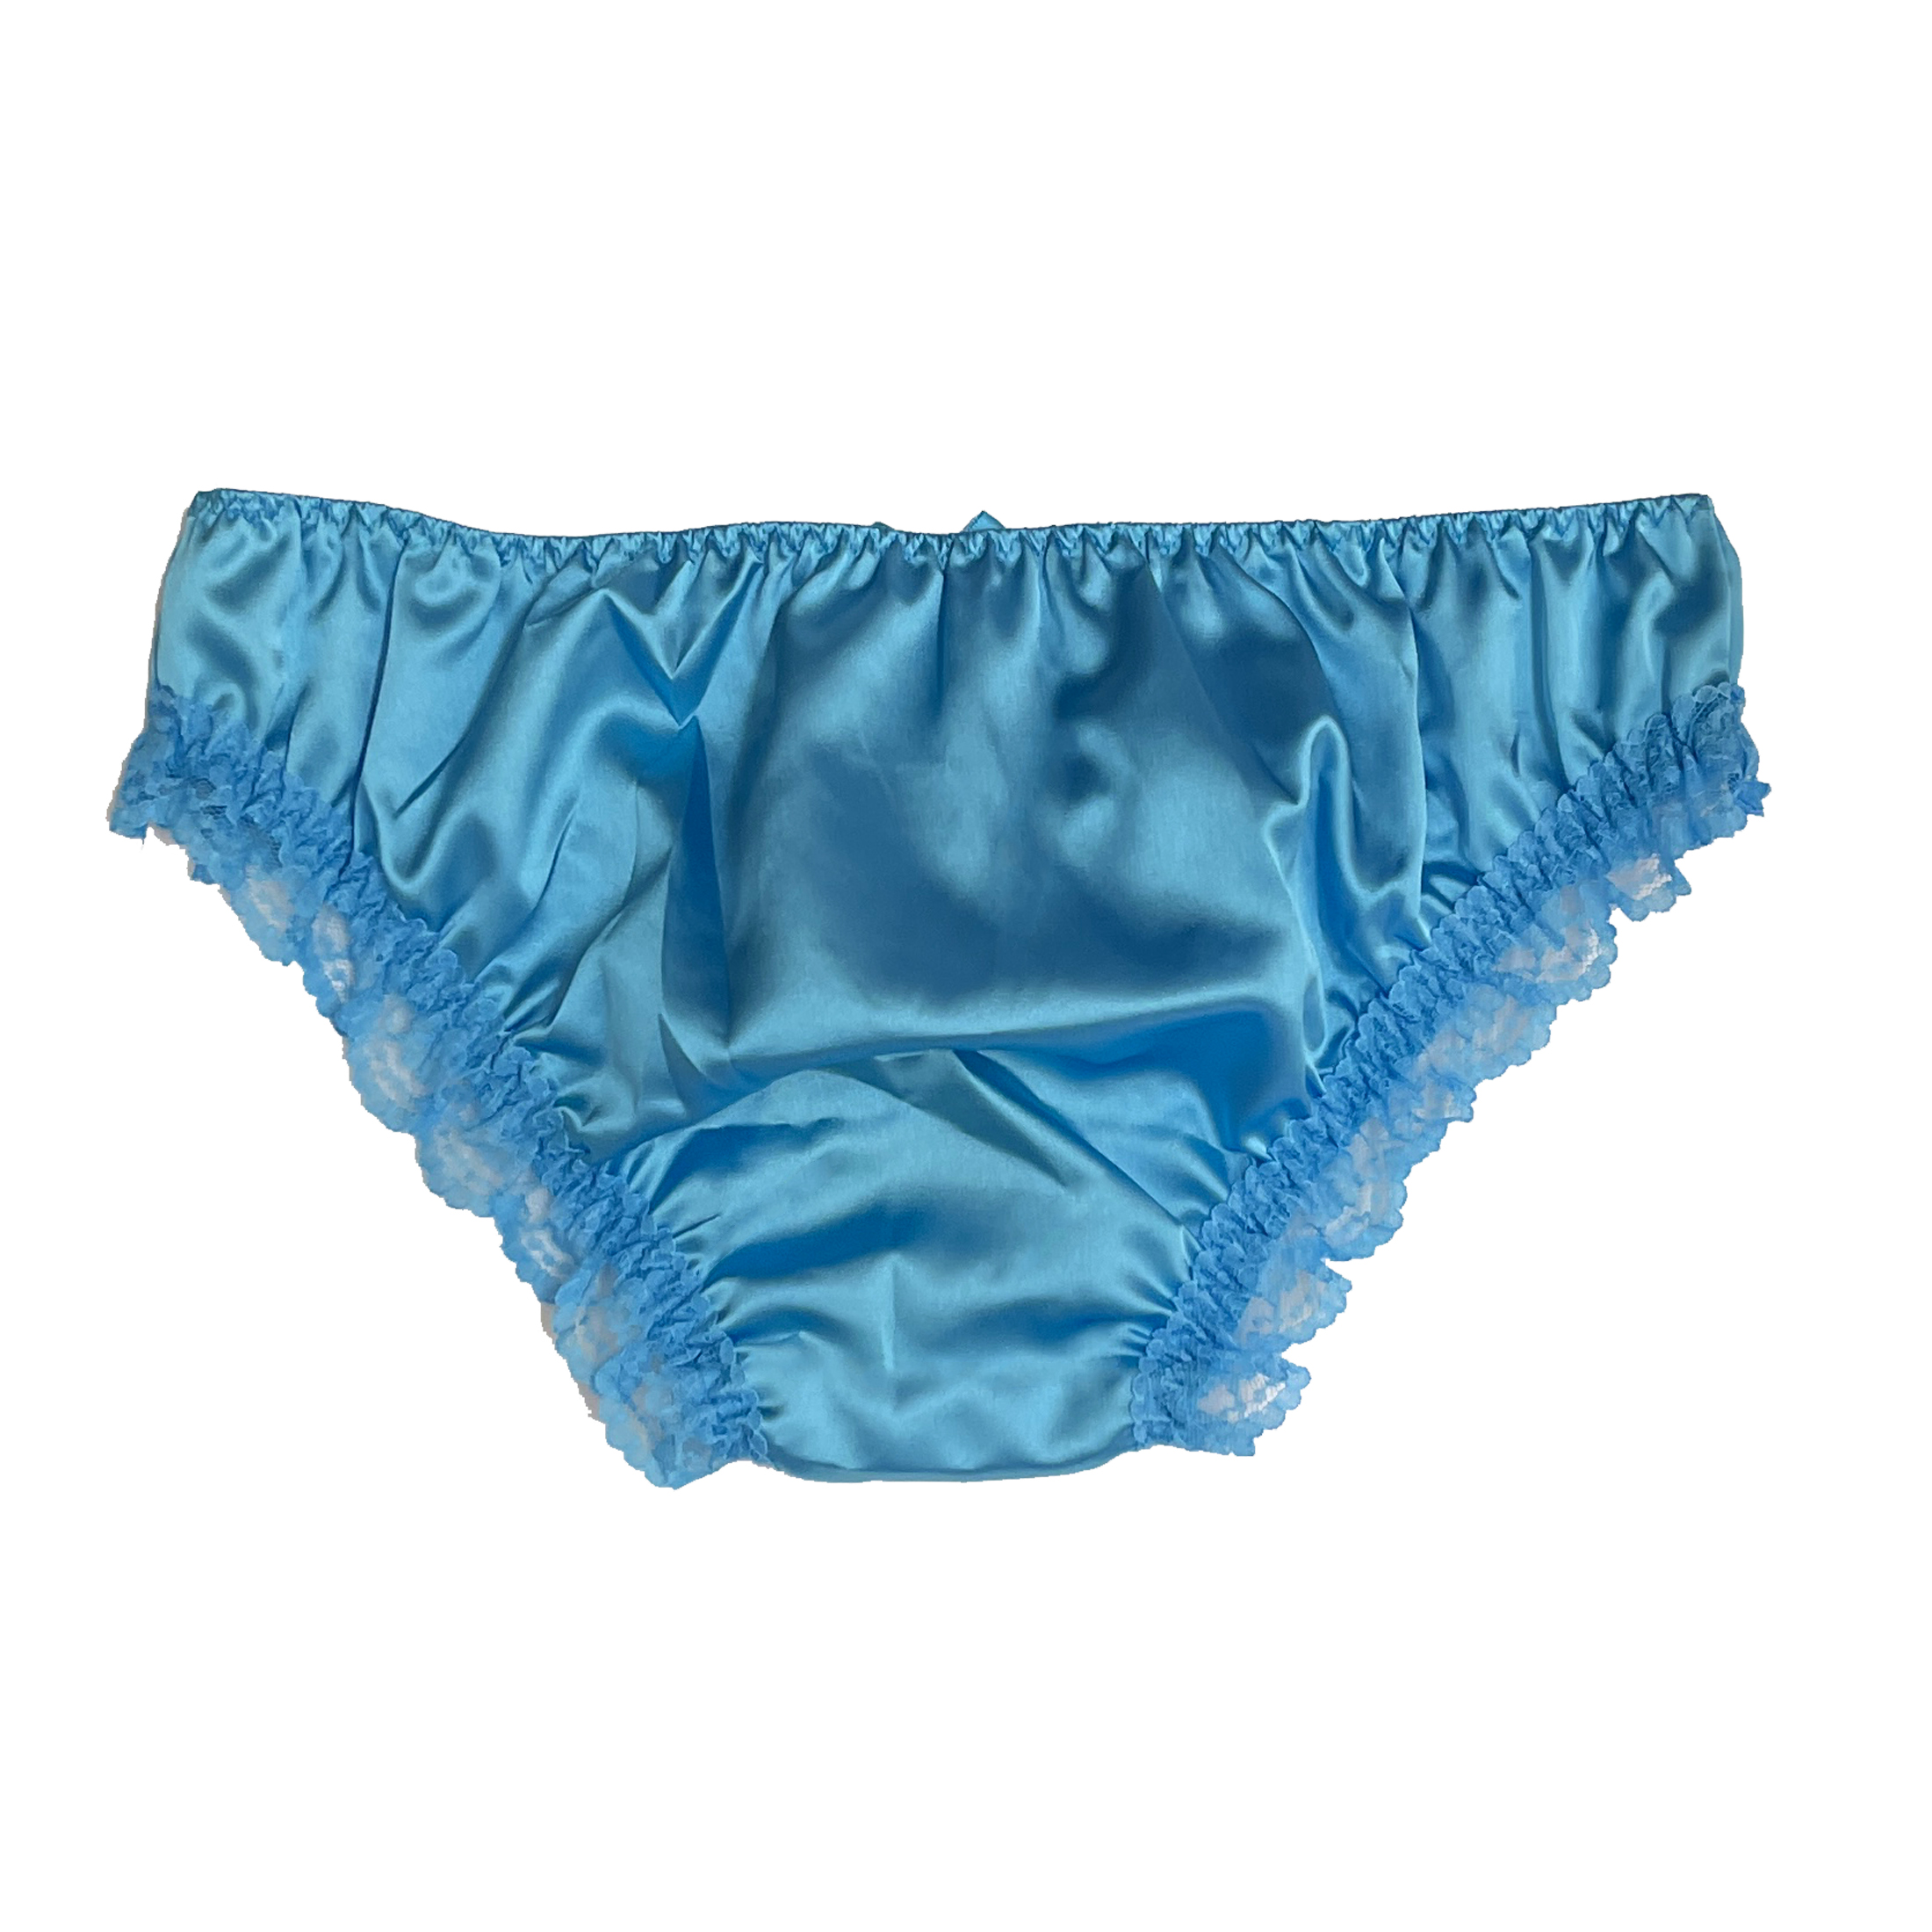 Satin Lace Frilly Sissy Cdtv Full Panties Knicker Briefs Underwear Size S Xxl £13 99 Picclick Uk